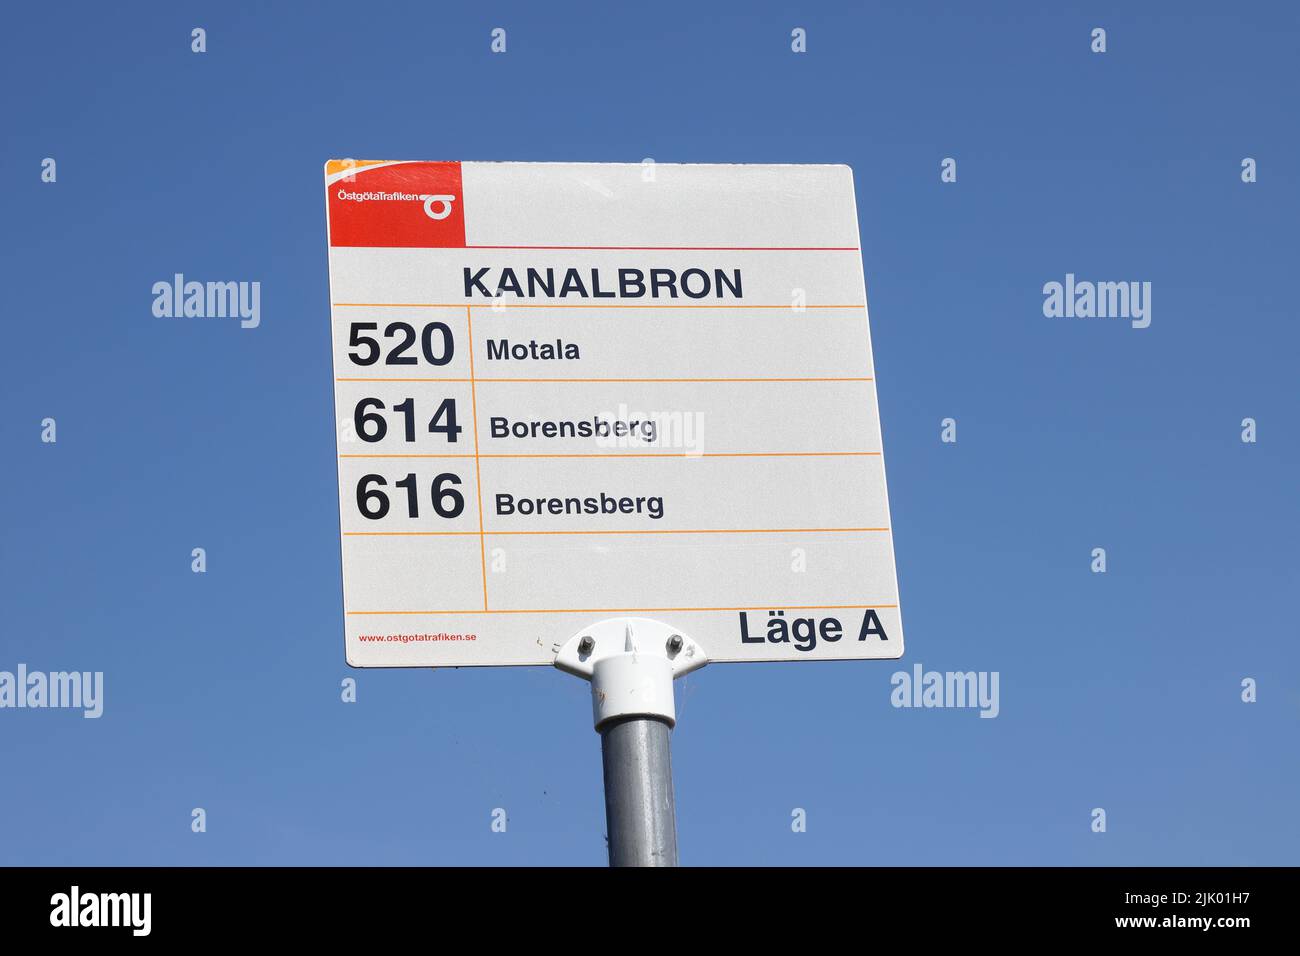 Borensberg, Sweden - June 27, 2022: Close-up view of the Ostgotatrafiken bus stop Kanalbron sign operating the 520, 614 and 616 services. Stock Photo